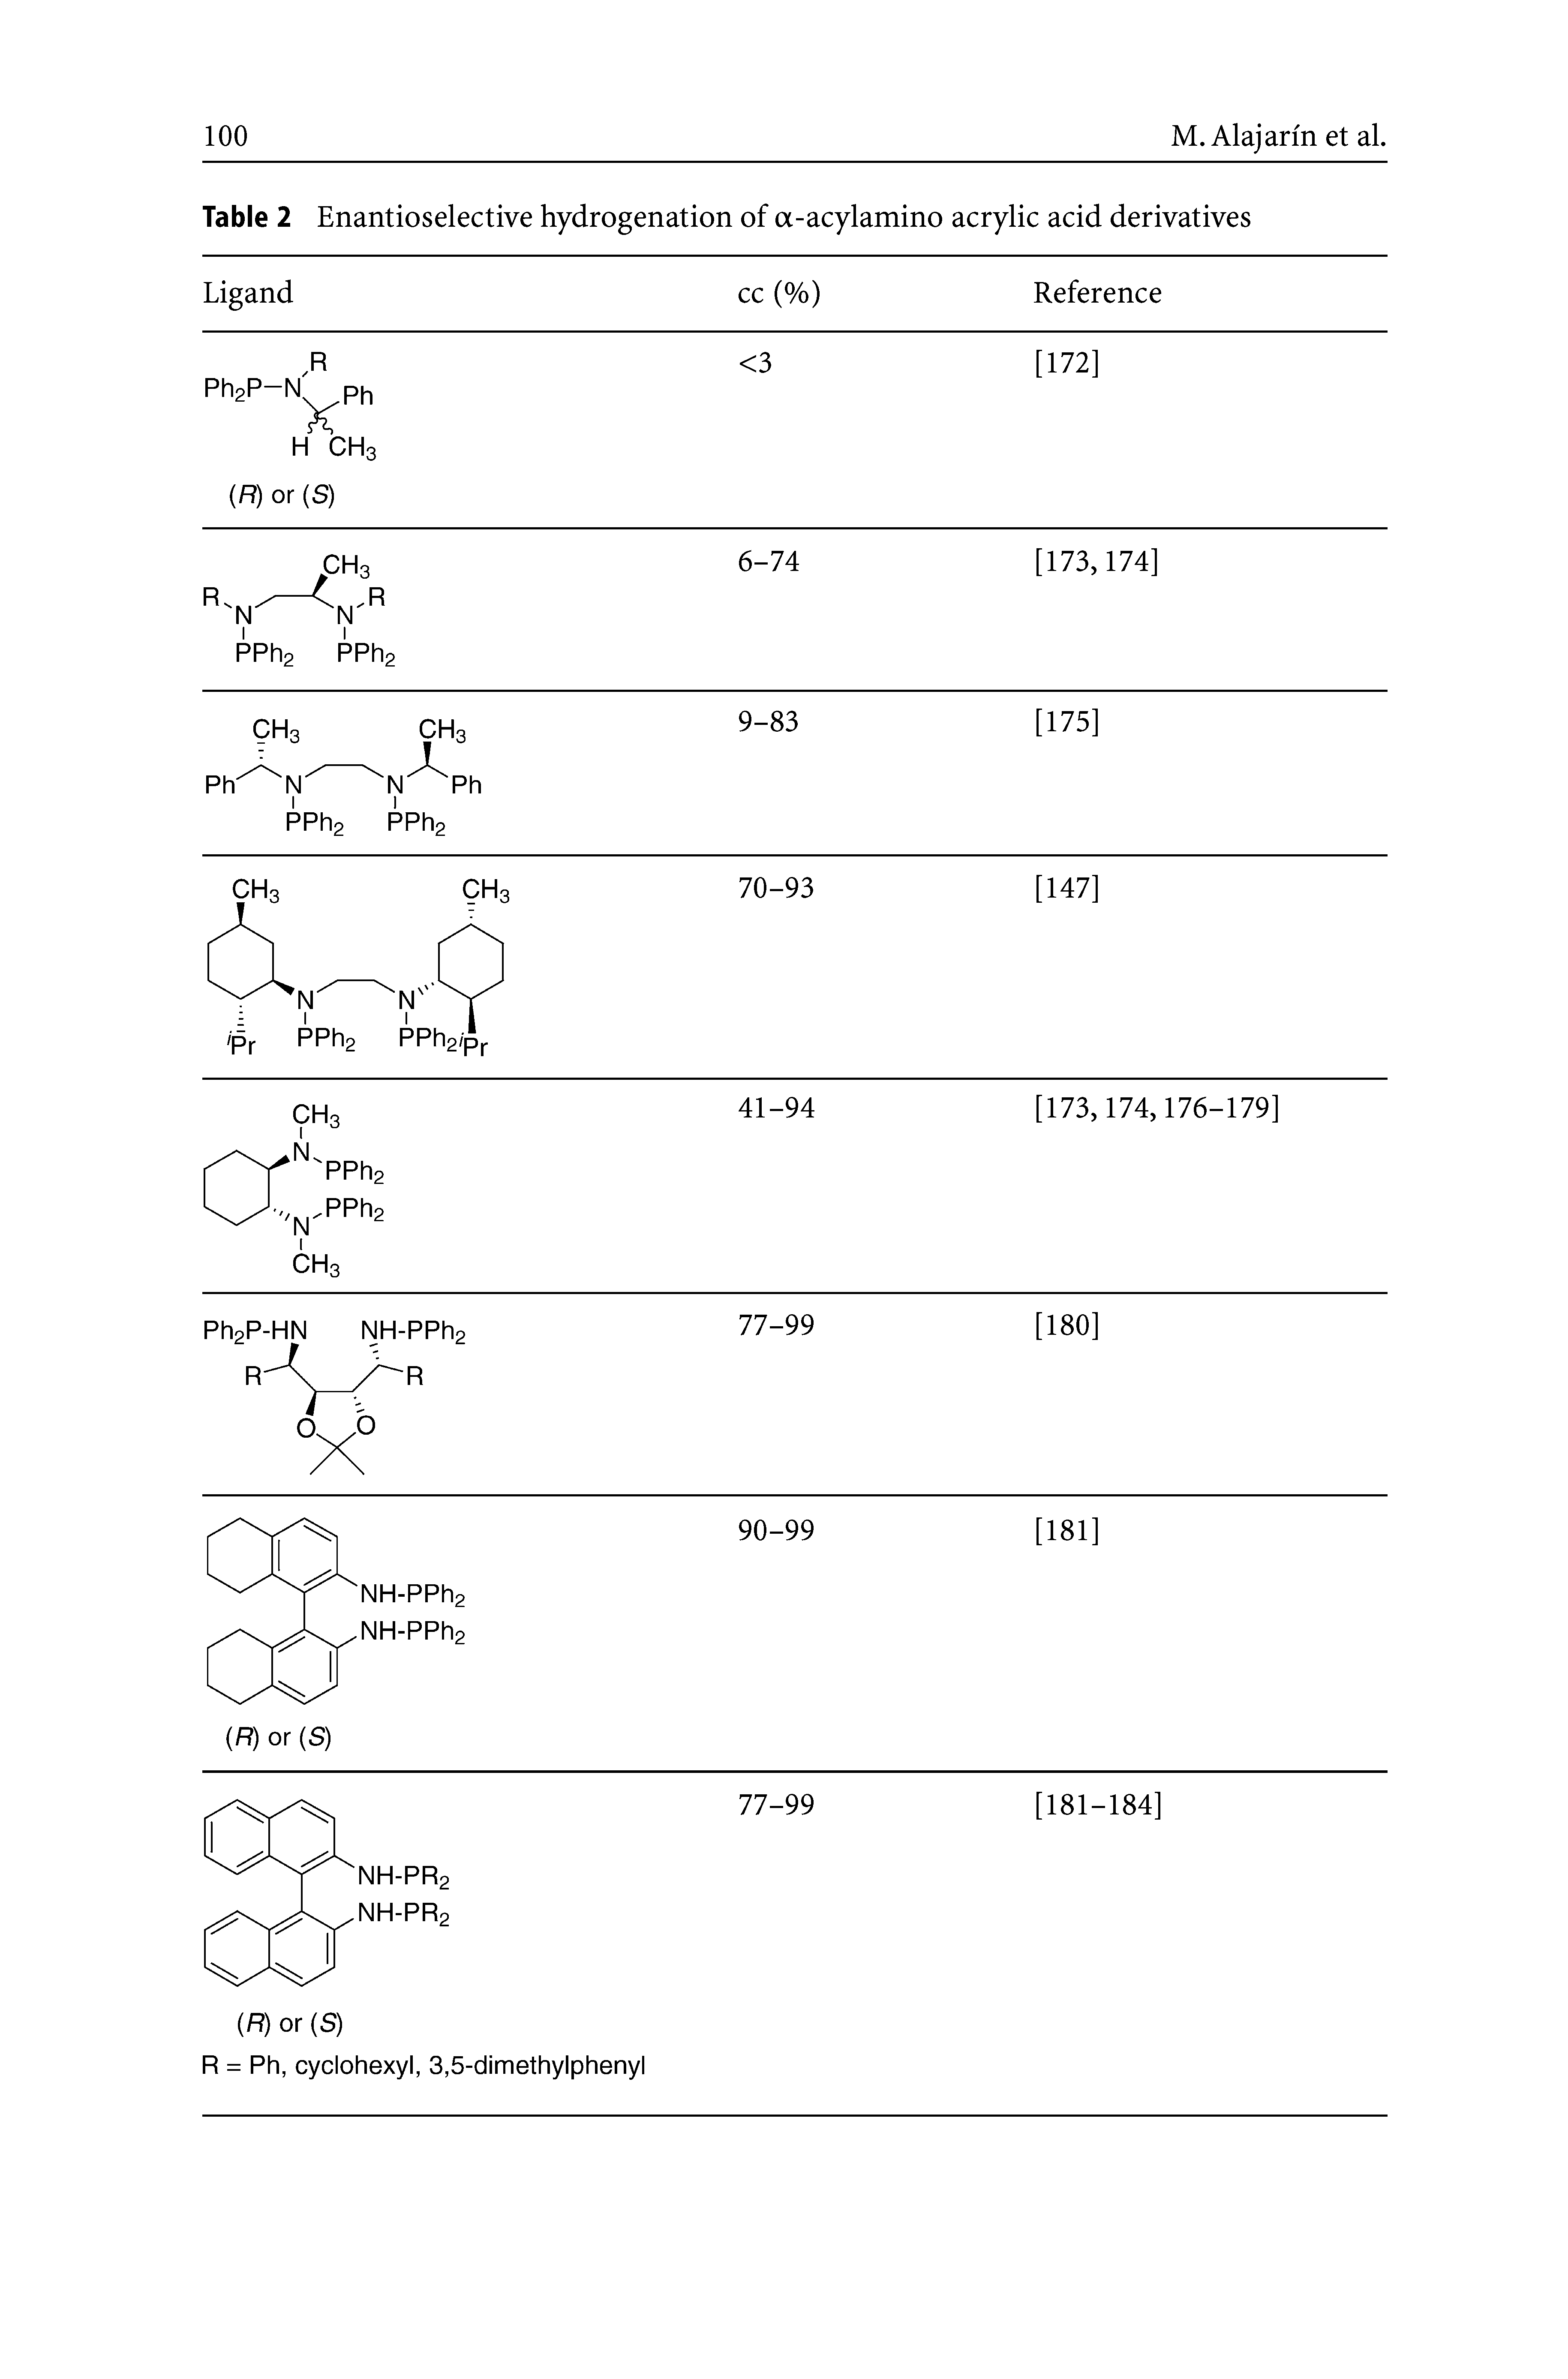 Table 2 Enantioselective hydrogenation of a-acylamino acrylic acid derivatives...